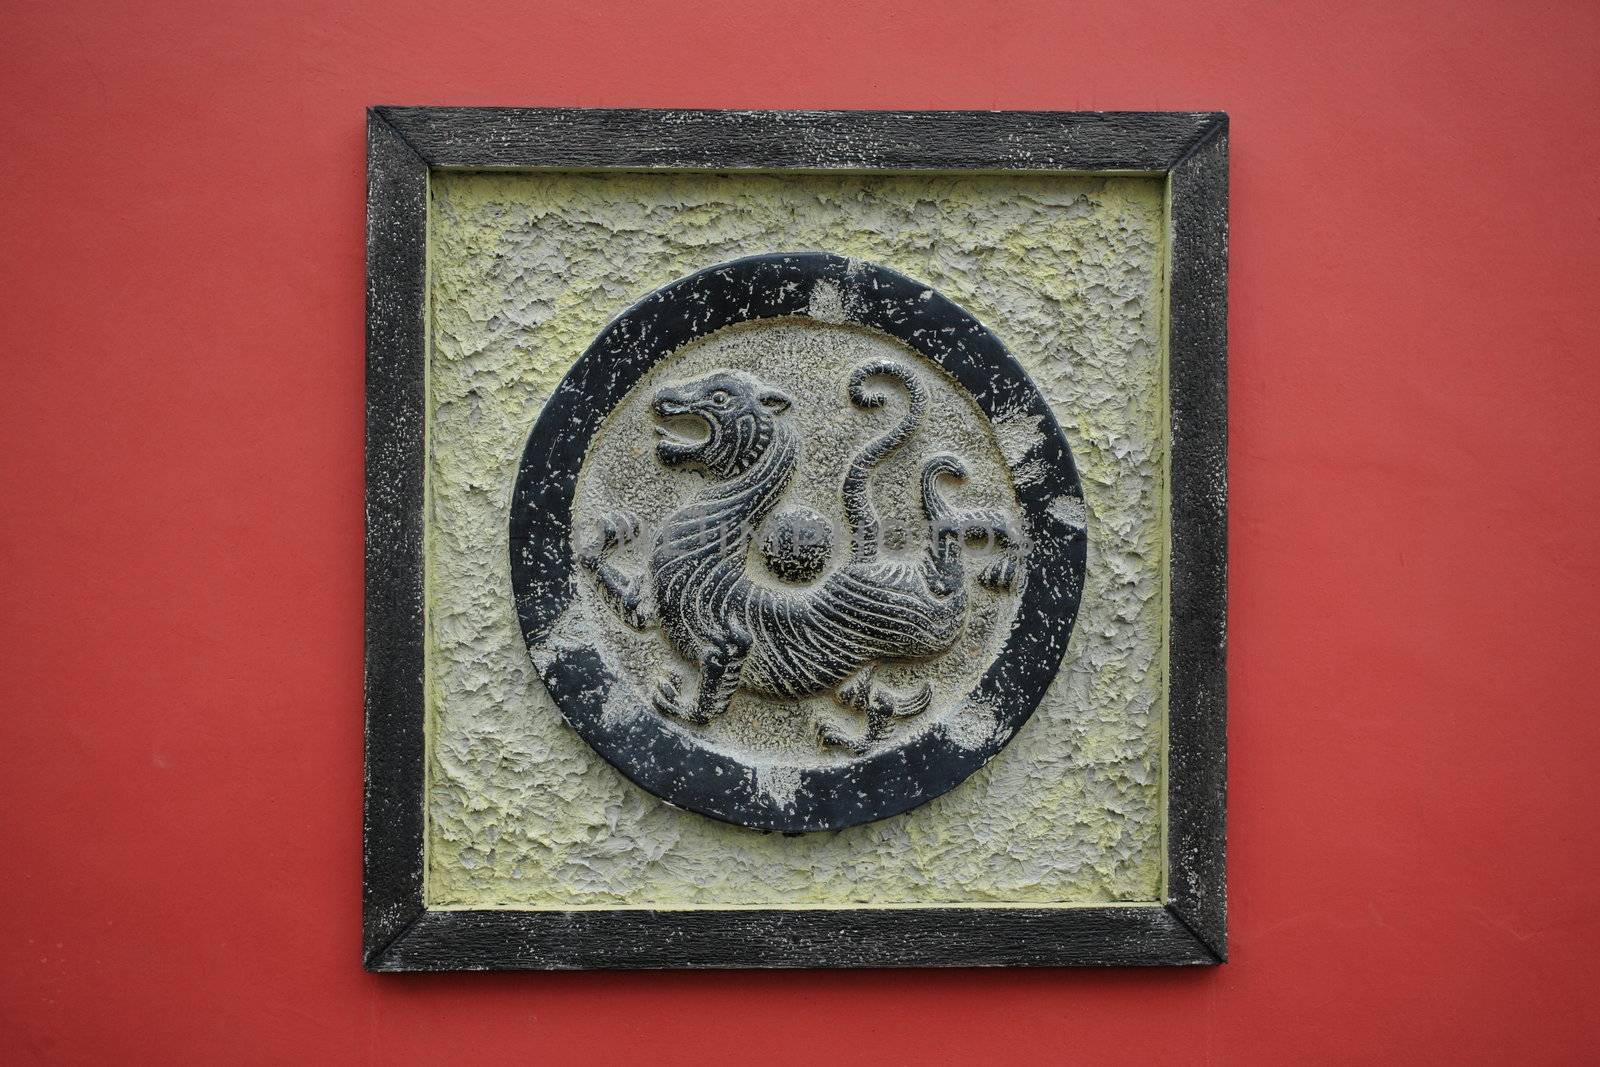 bronze tiger sculpture on a red wall by leungchopan